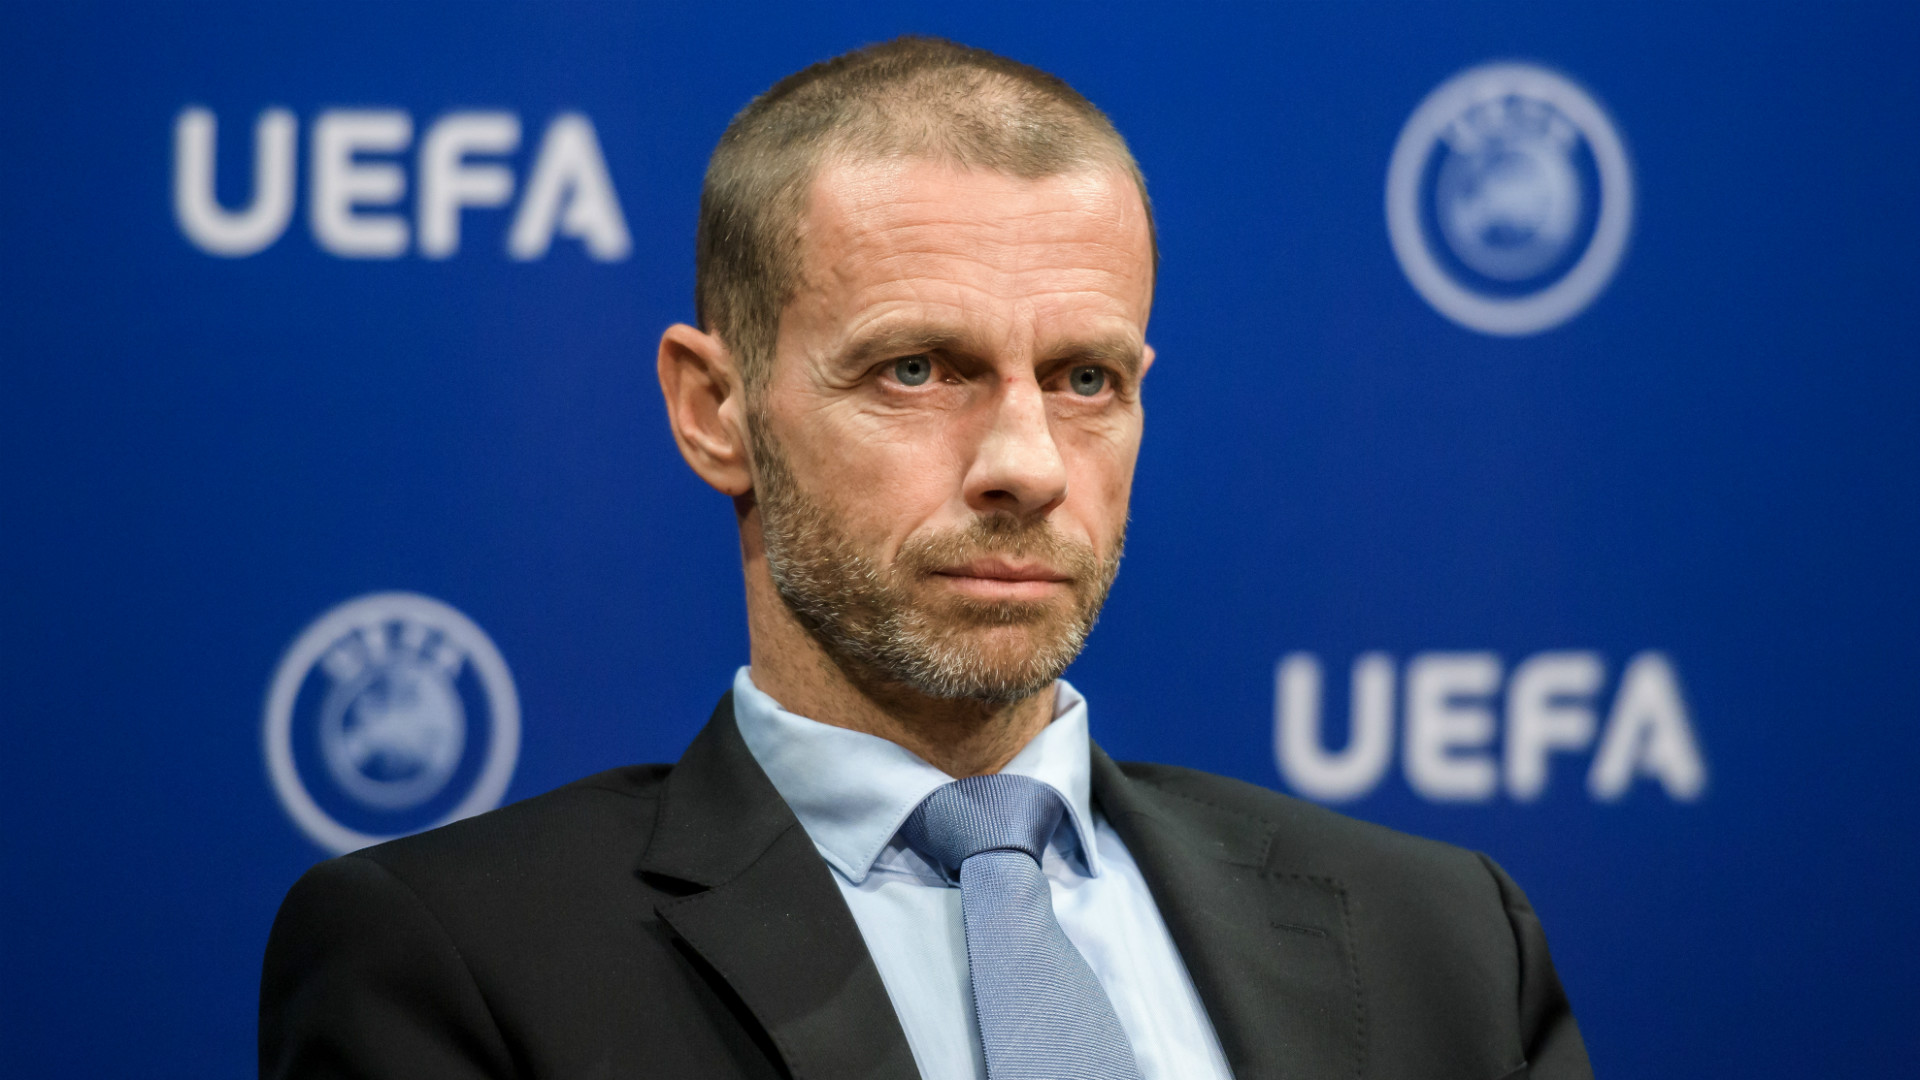 Александер Чеферин переизбран президентом УЕФА на третий срок